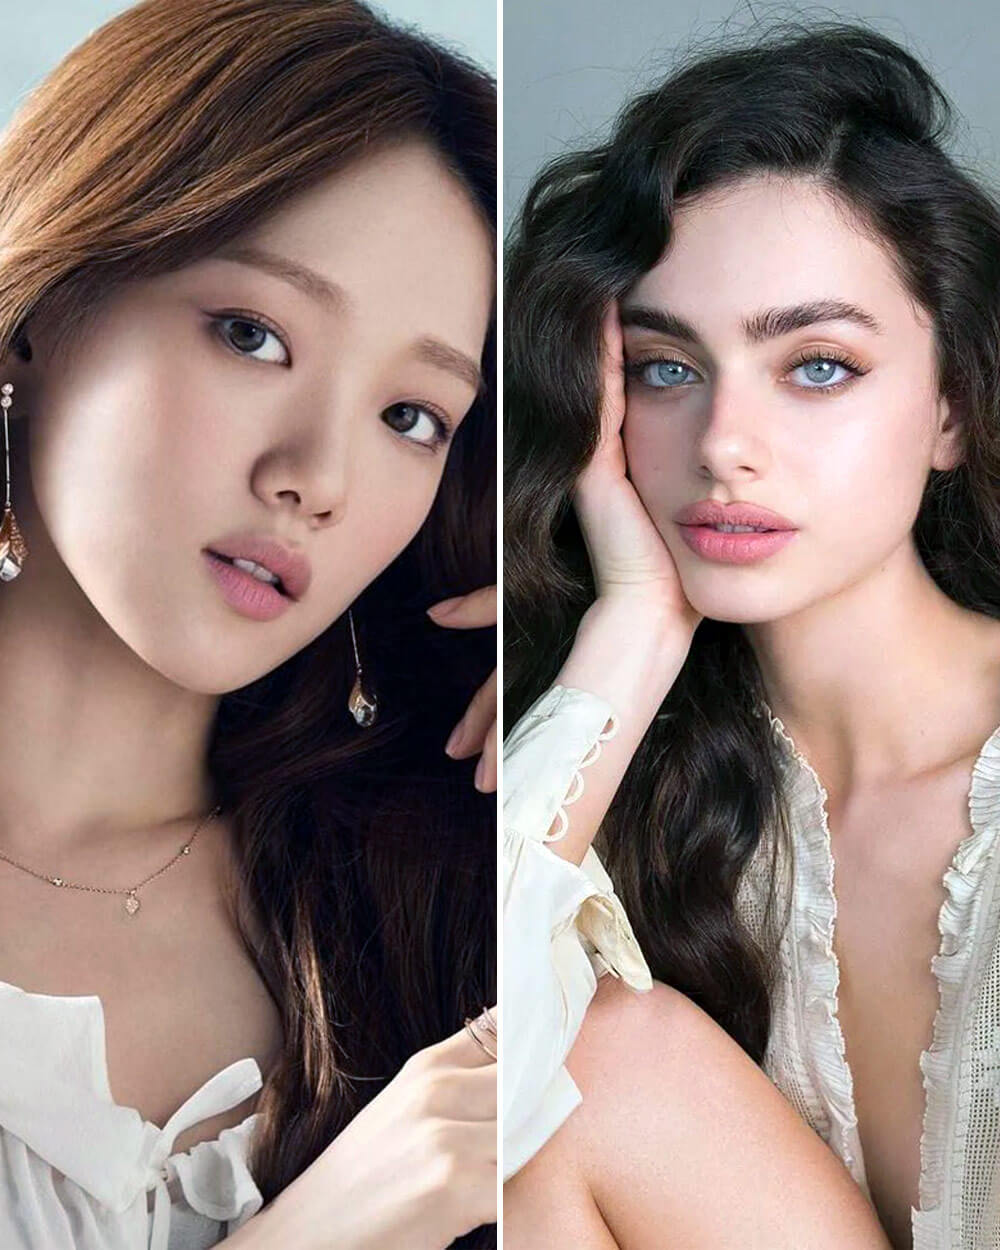 https://thevou.com/wp-content/uploads/2021/05/Korean-Beaury-Standards-wtvox.com-Korean-vs-Weestern-Beauty-01.jpg